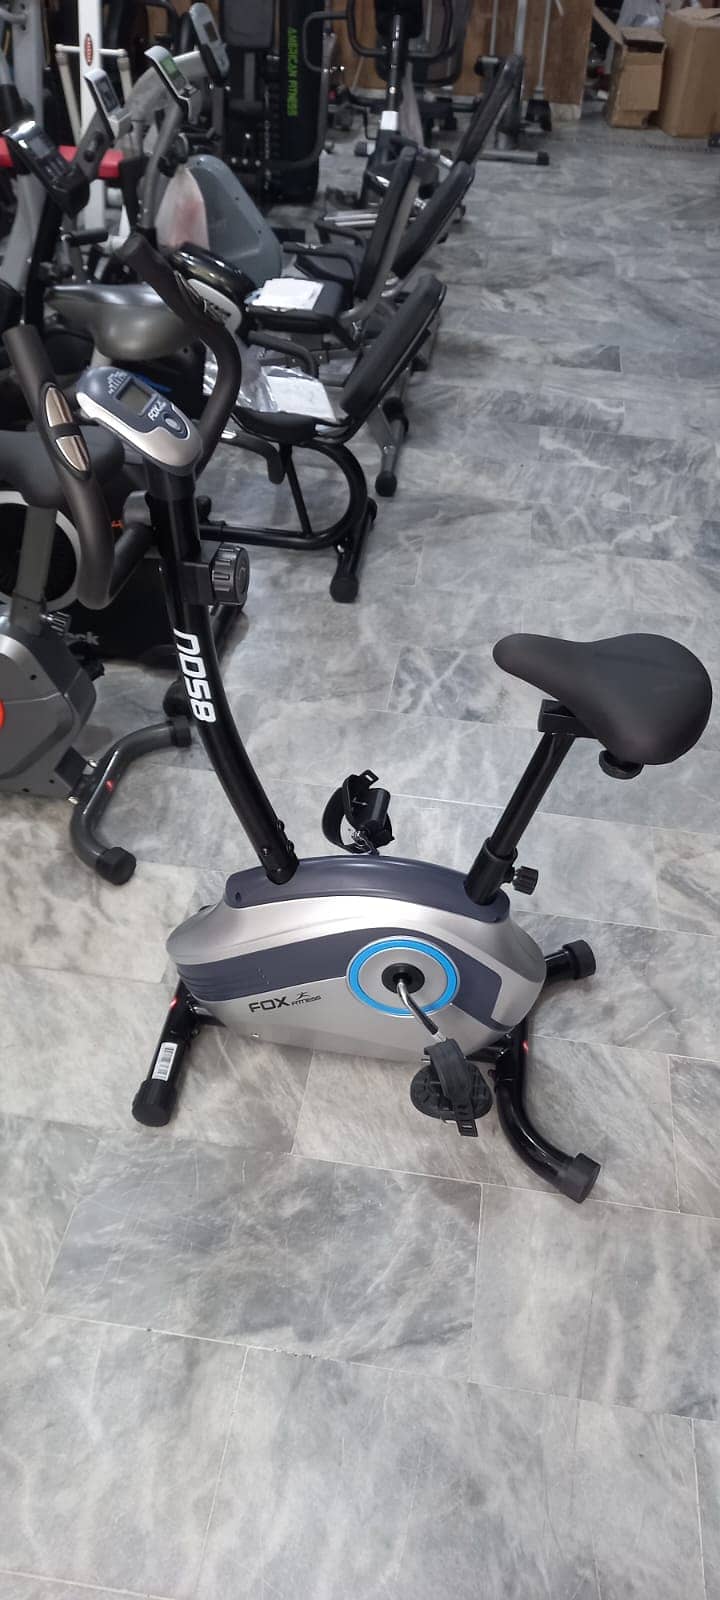 Exercise elliptical |treadmill |upright bike spin bike| cycle|dumbball 19